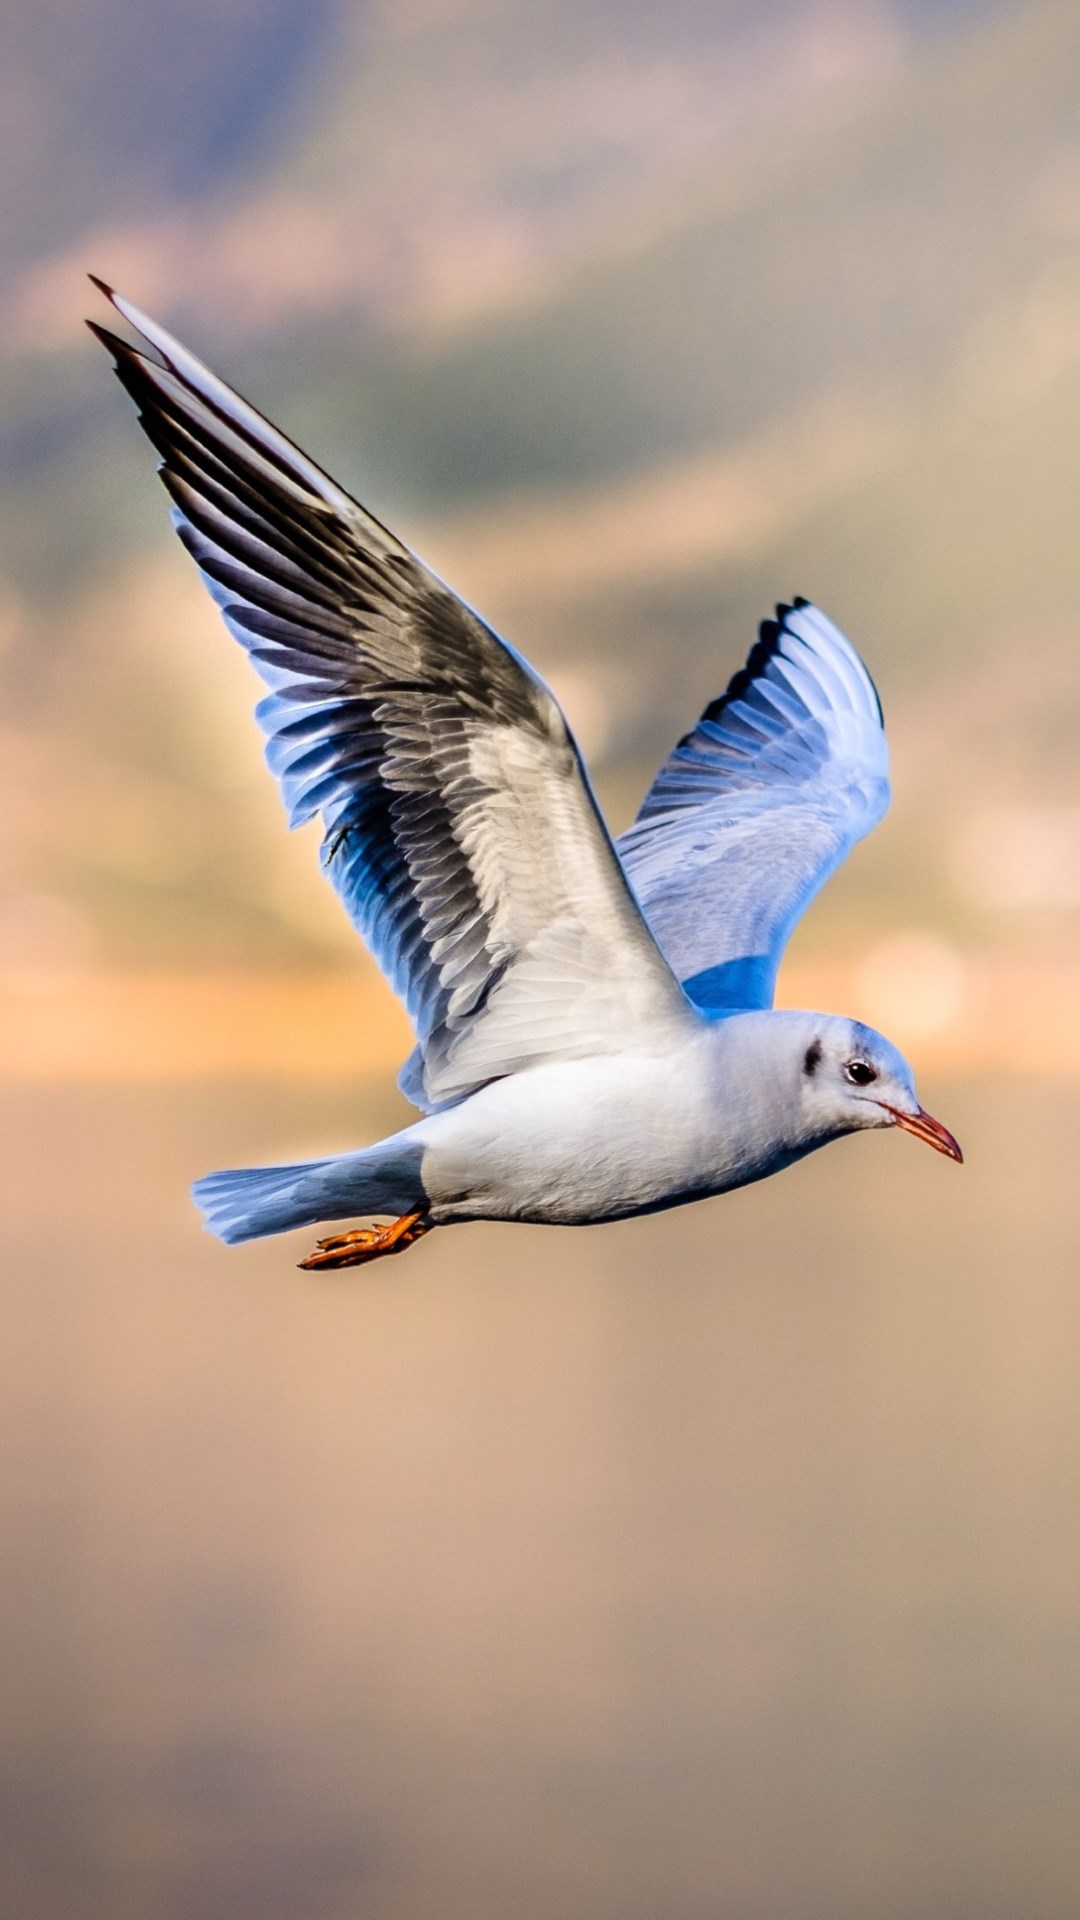 Seagull in flight wallpaper 1080x1920